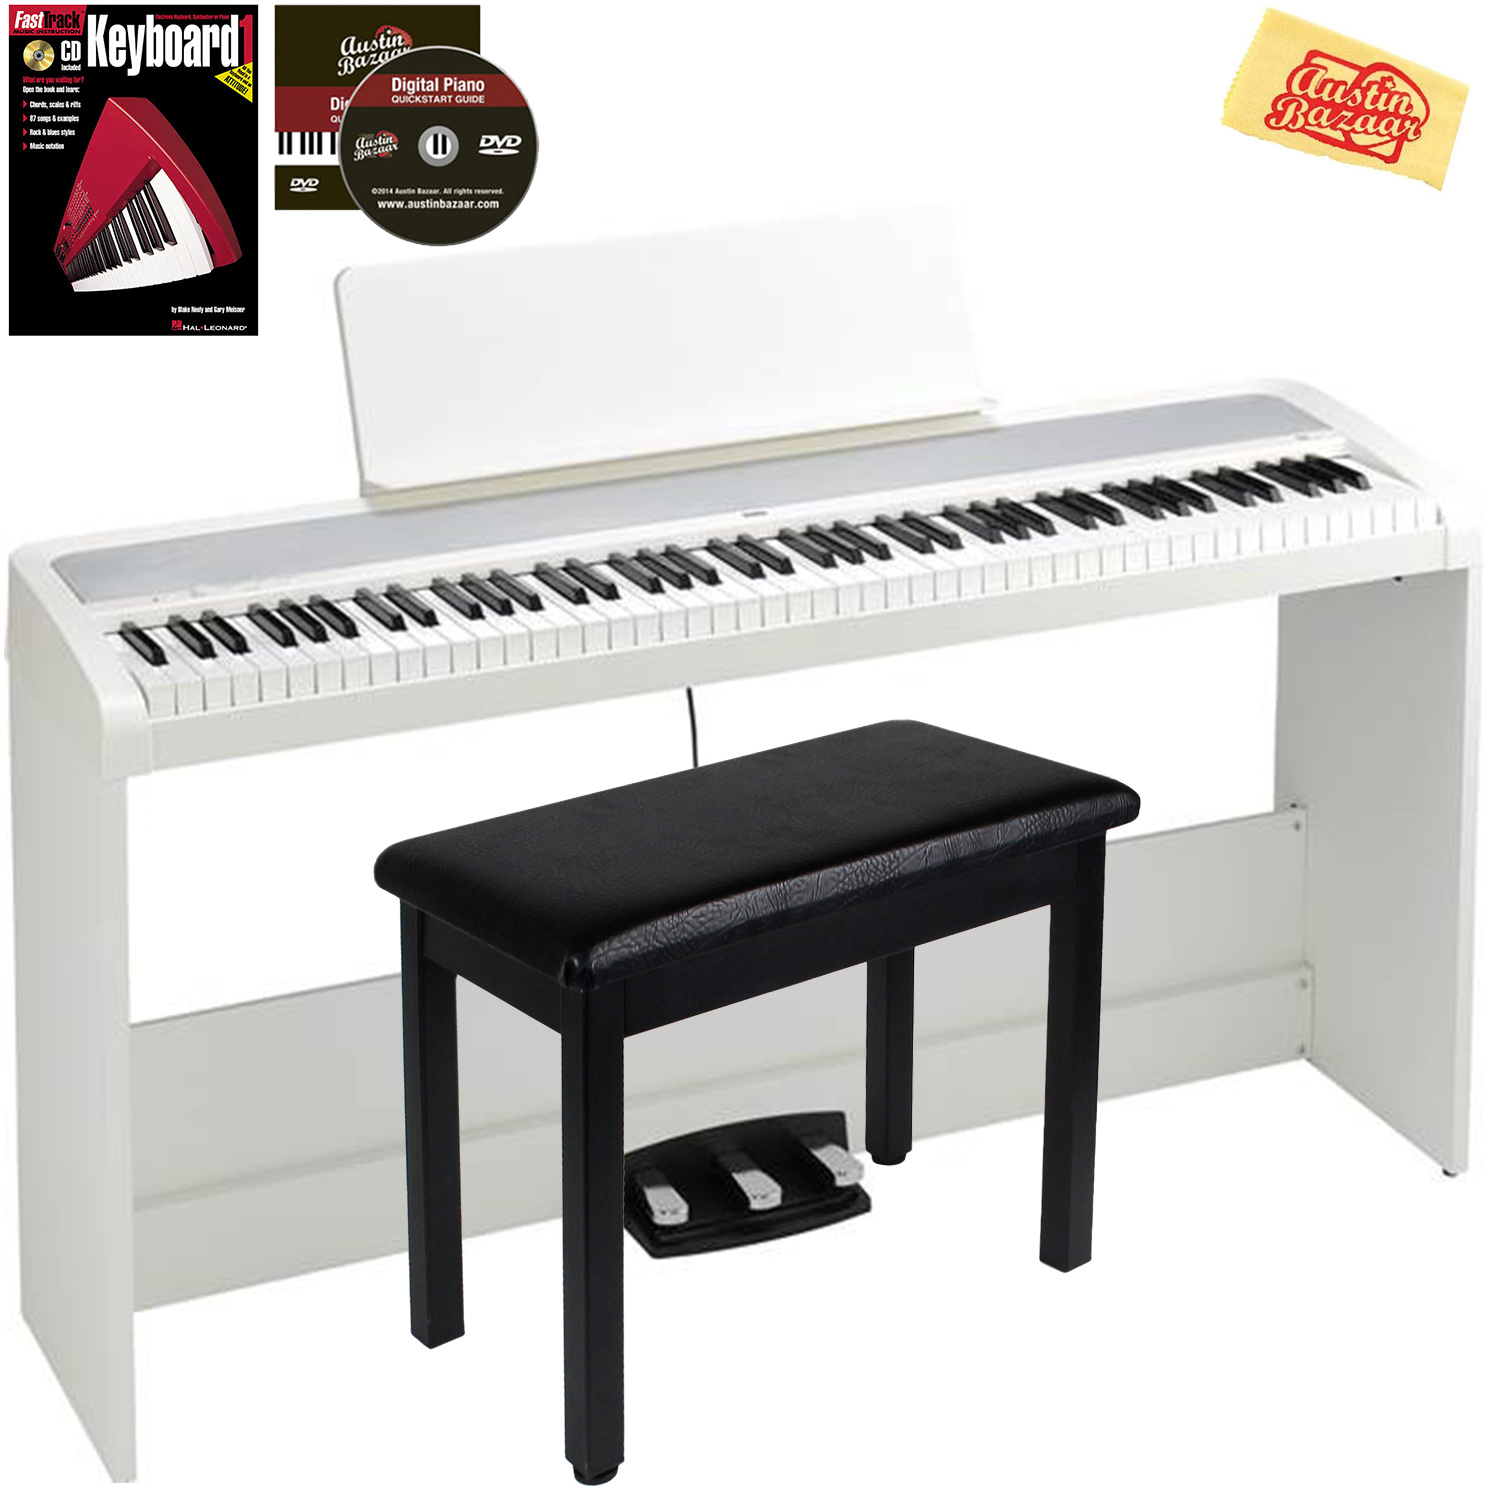 Korg B2SP Digital Piano - White w/ Furniture Stand 726152027497 | eBay